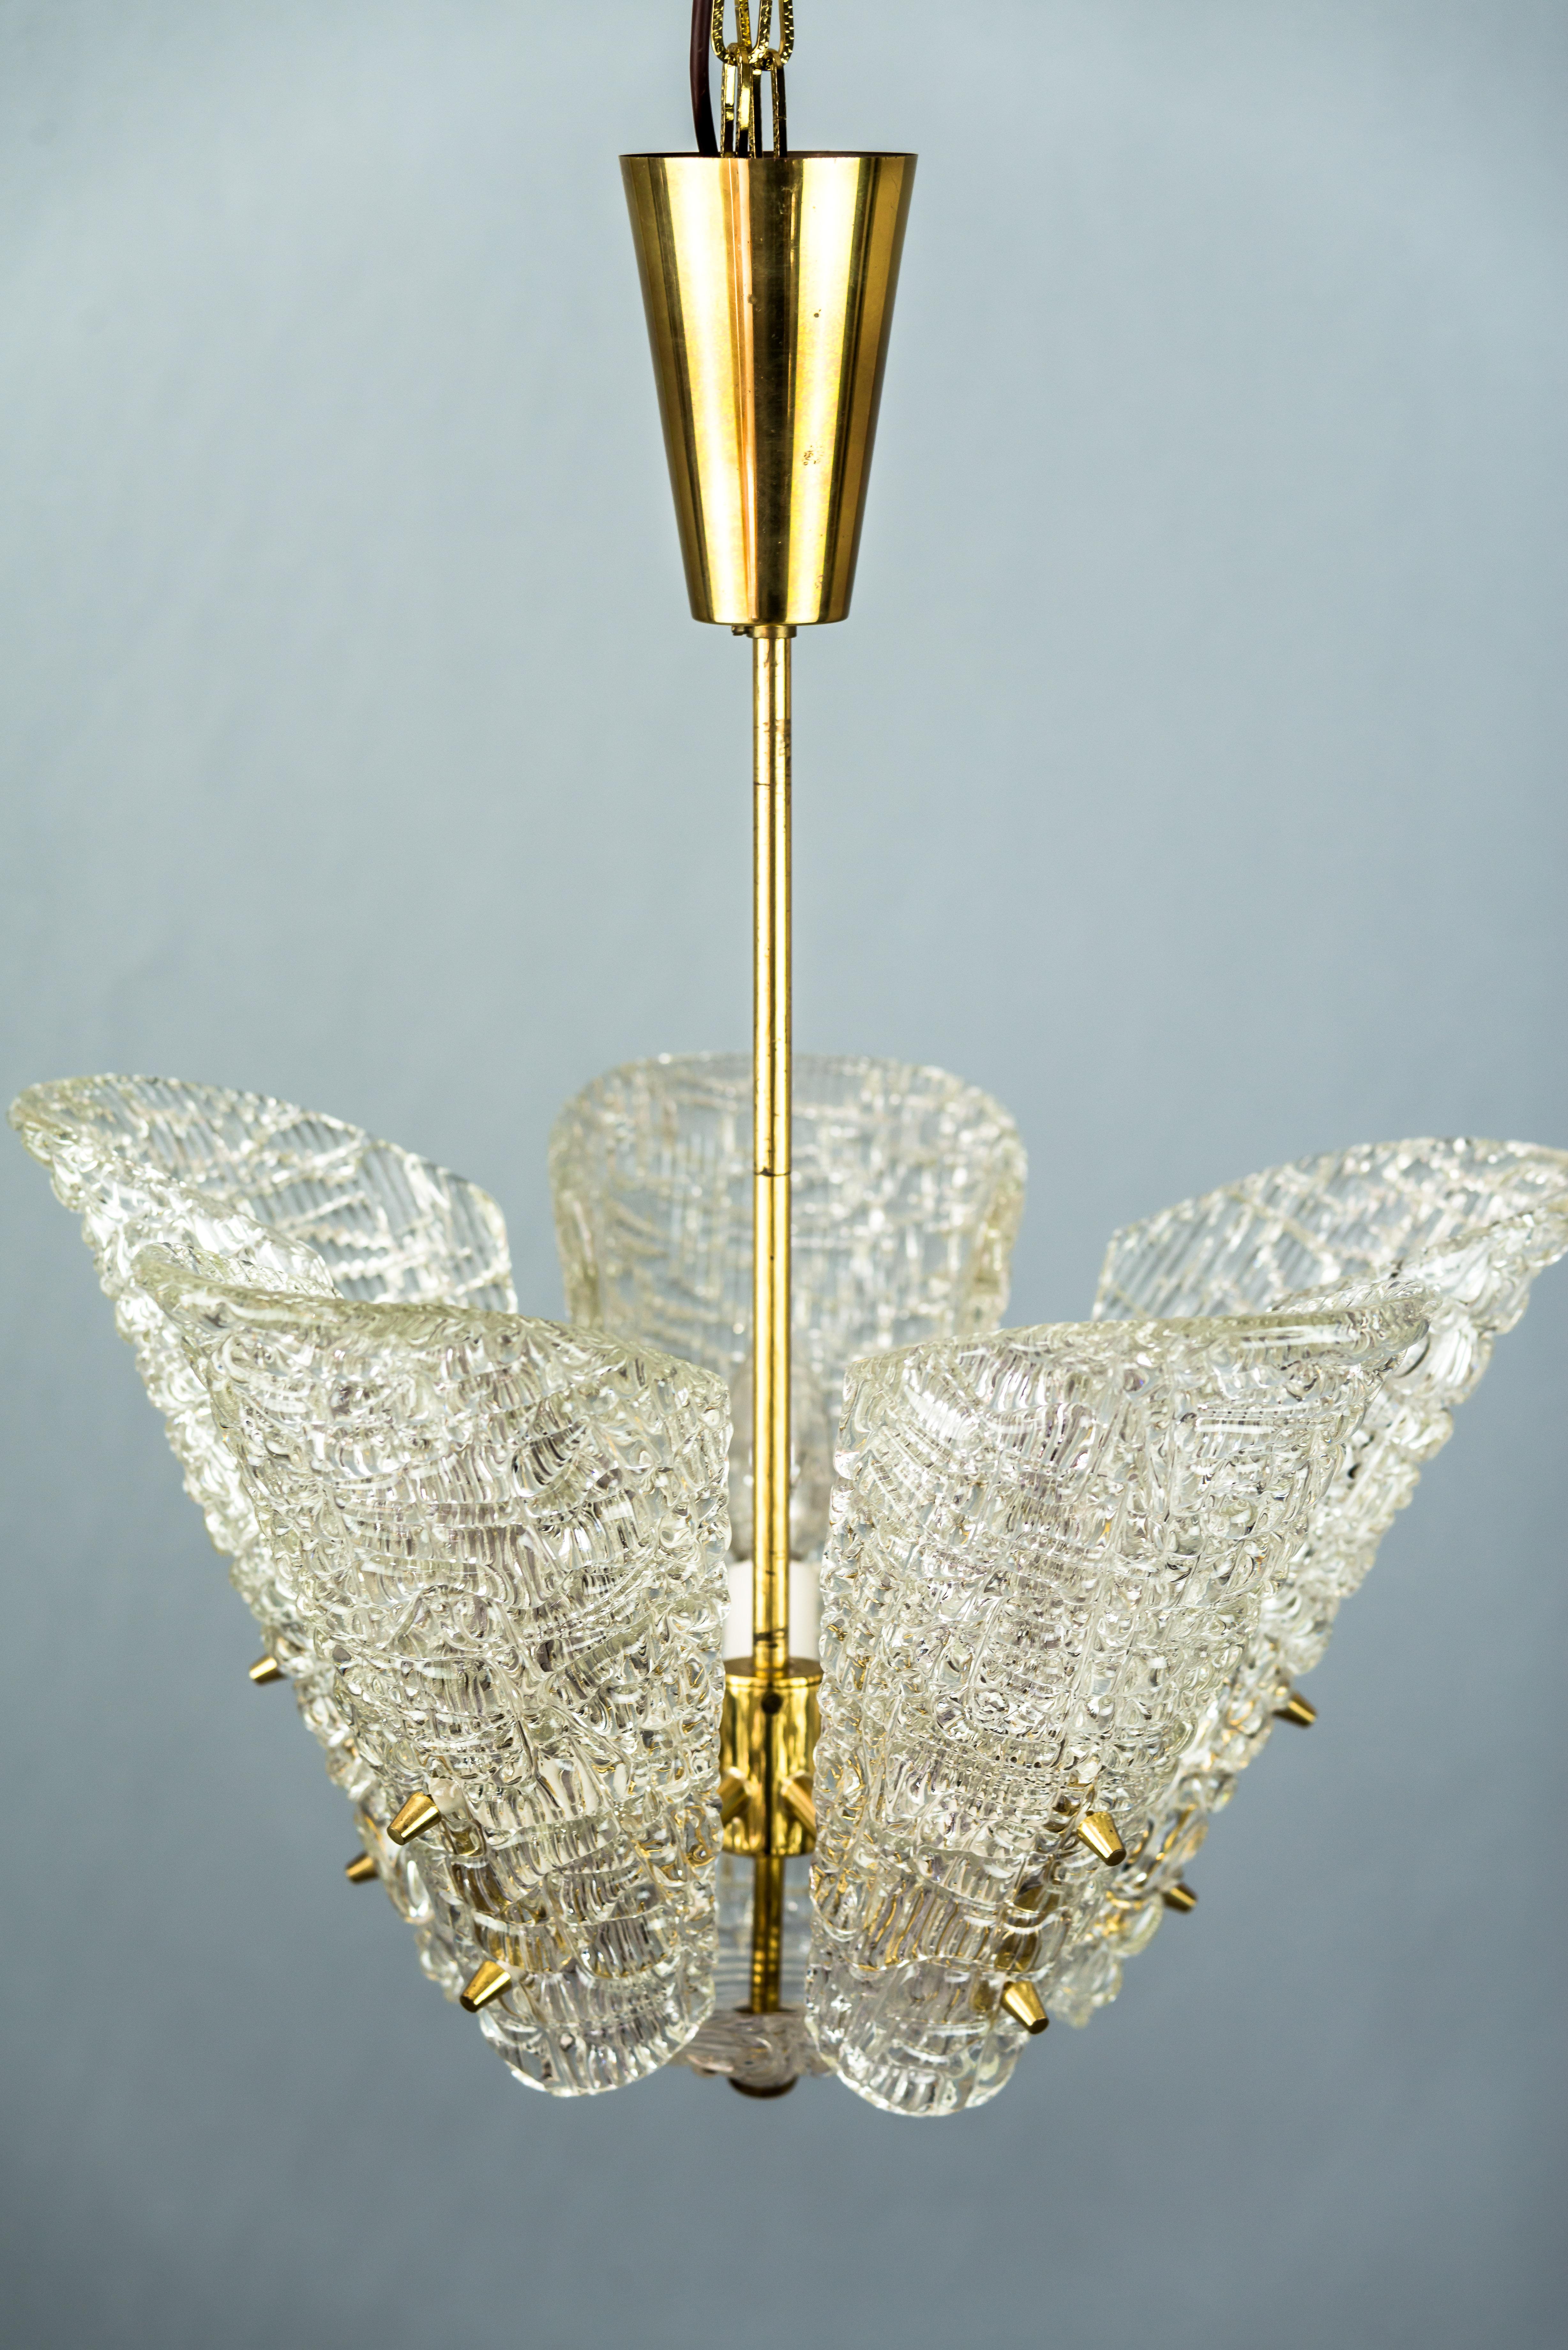 Beautiful Kalmar chandelier with textured glass, circa 1950s
Original condition.